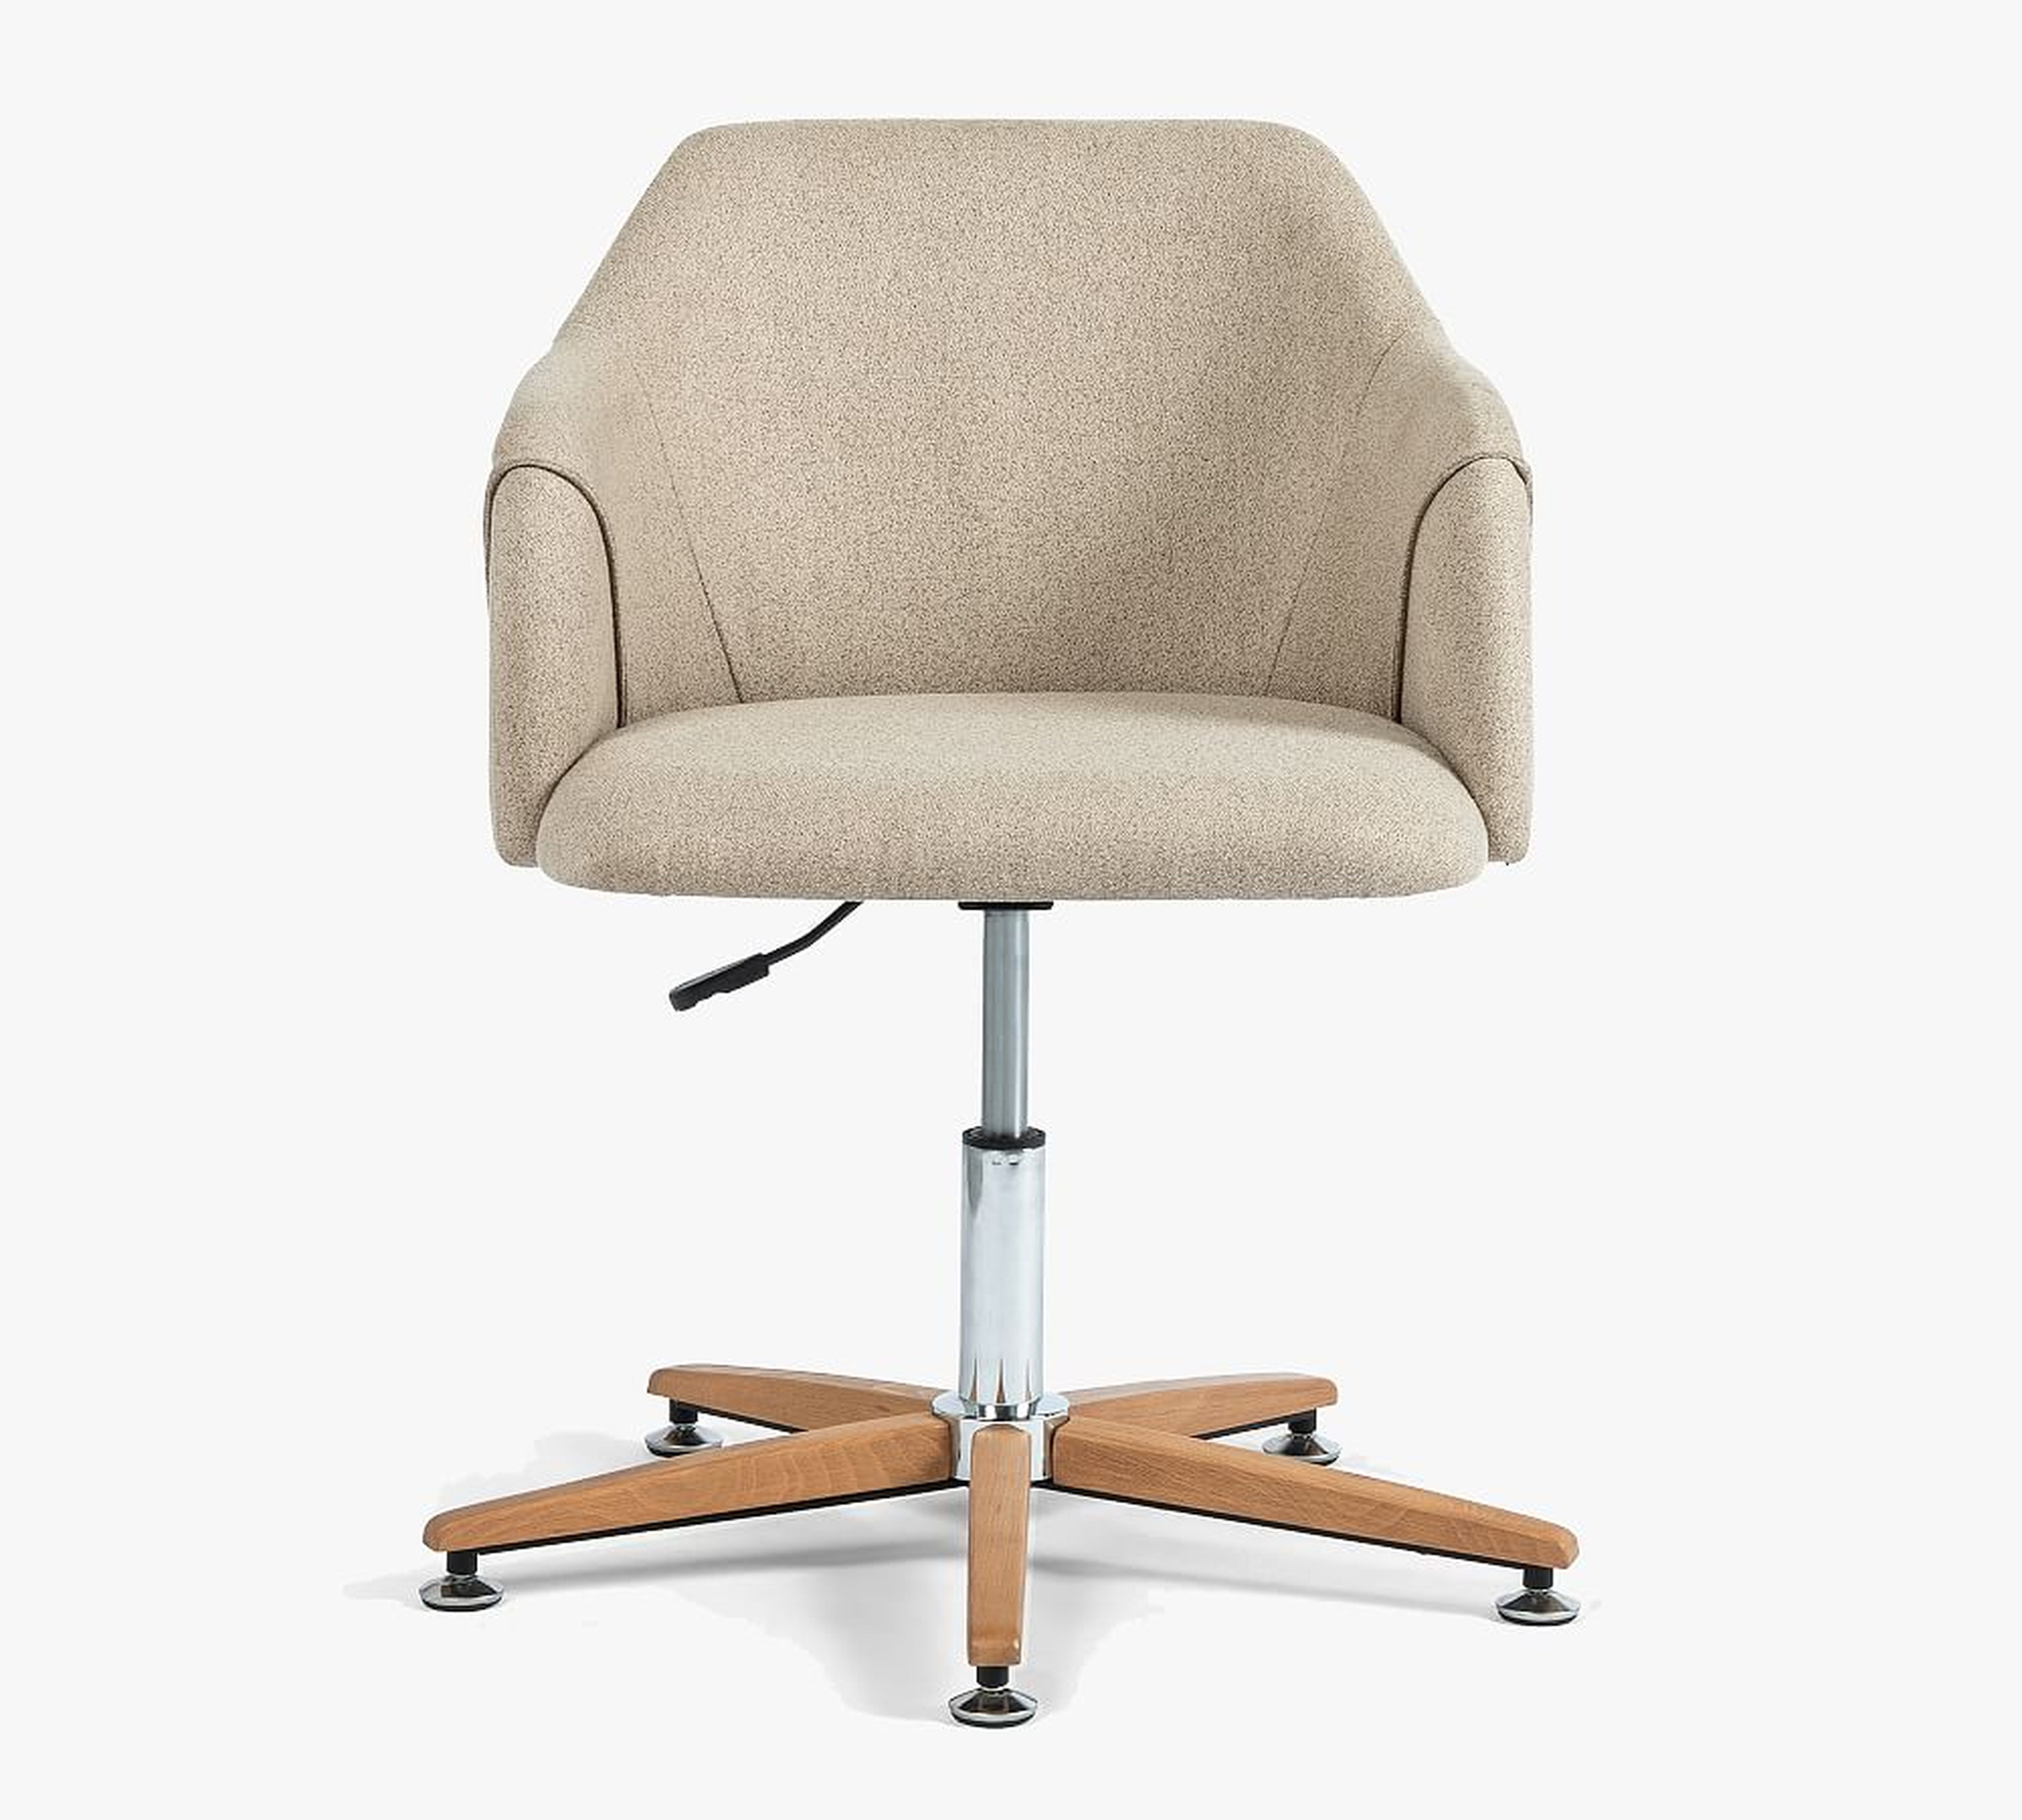 Colusa Upholstered Swivel Desk Chair, Fedora Oatmeal - Pottery Barn